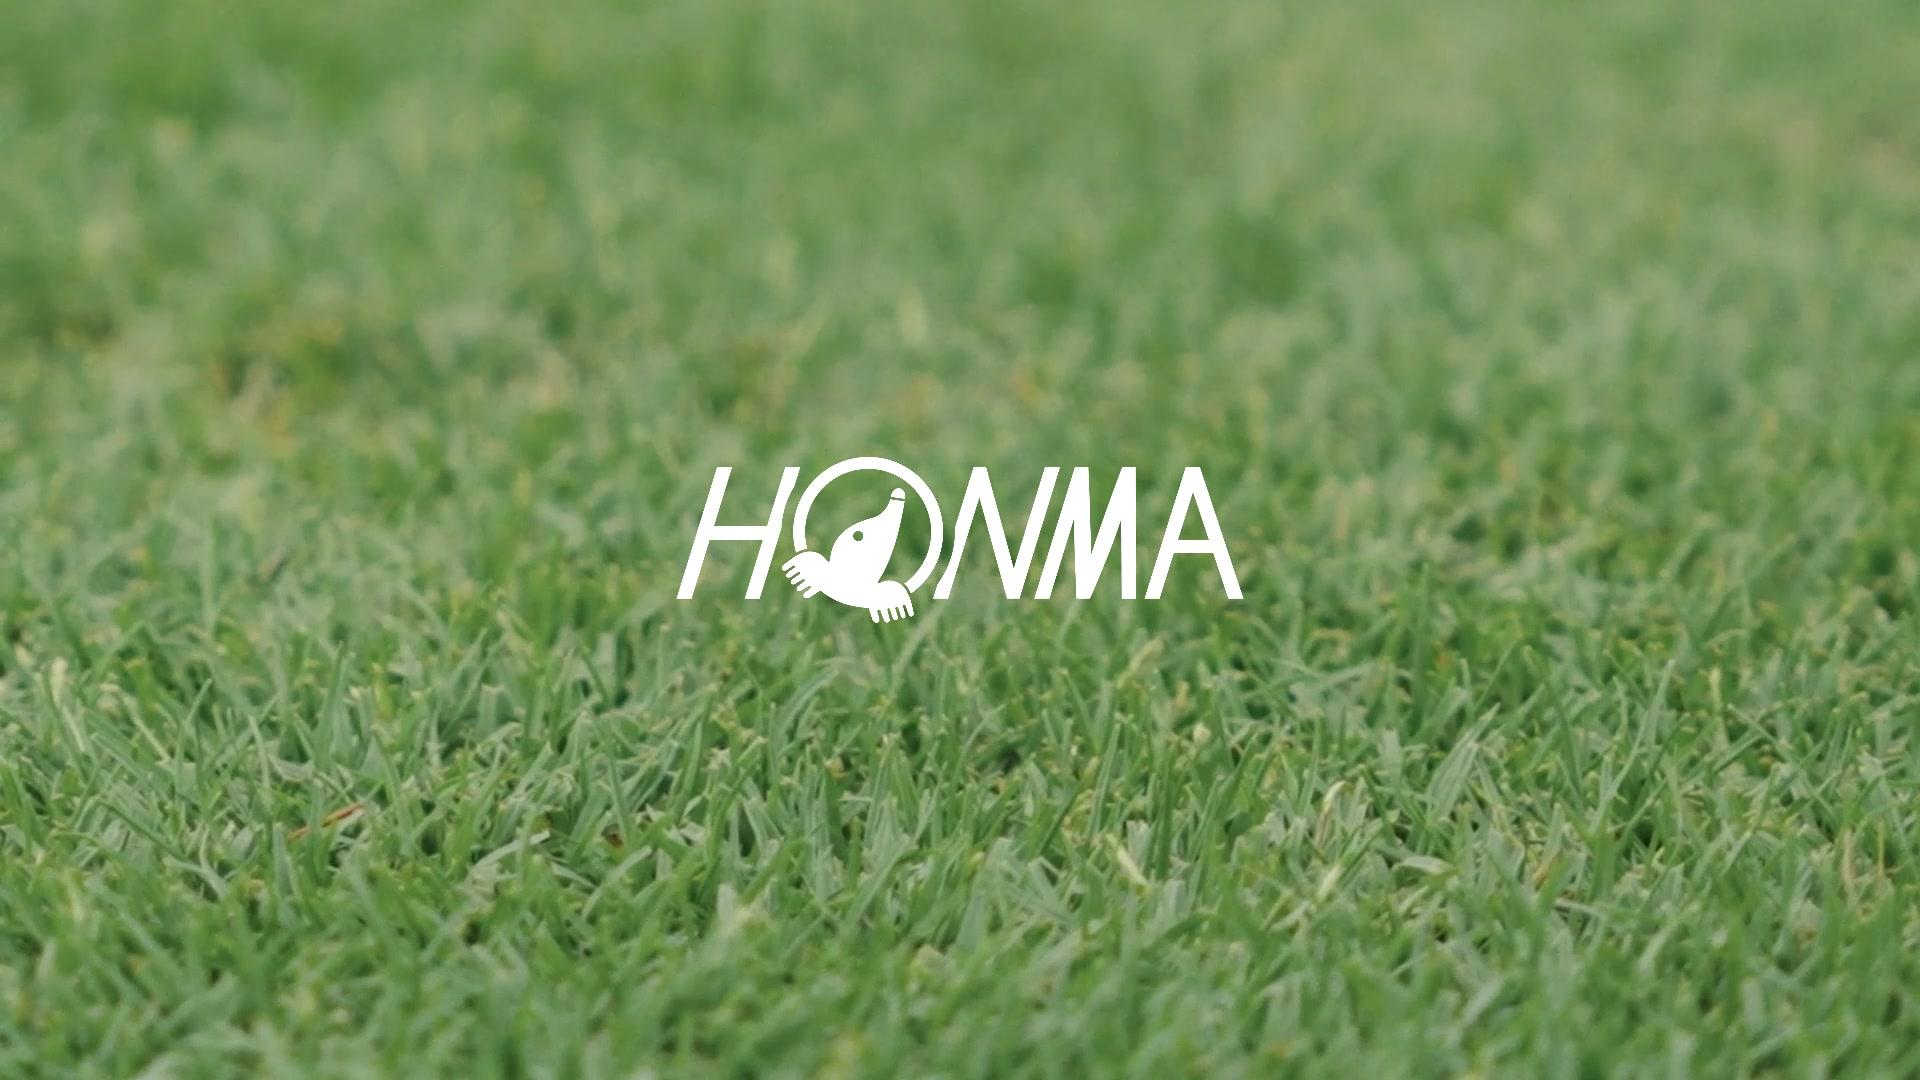 HONMA-FW22 形象片